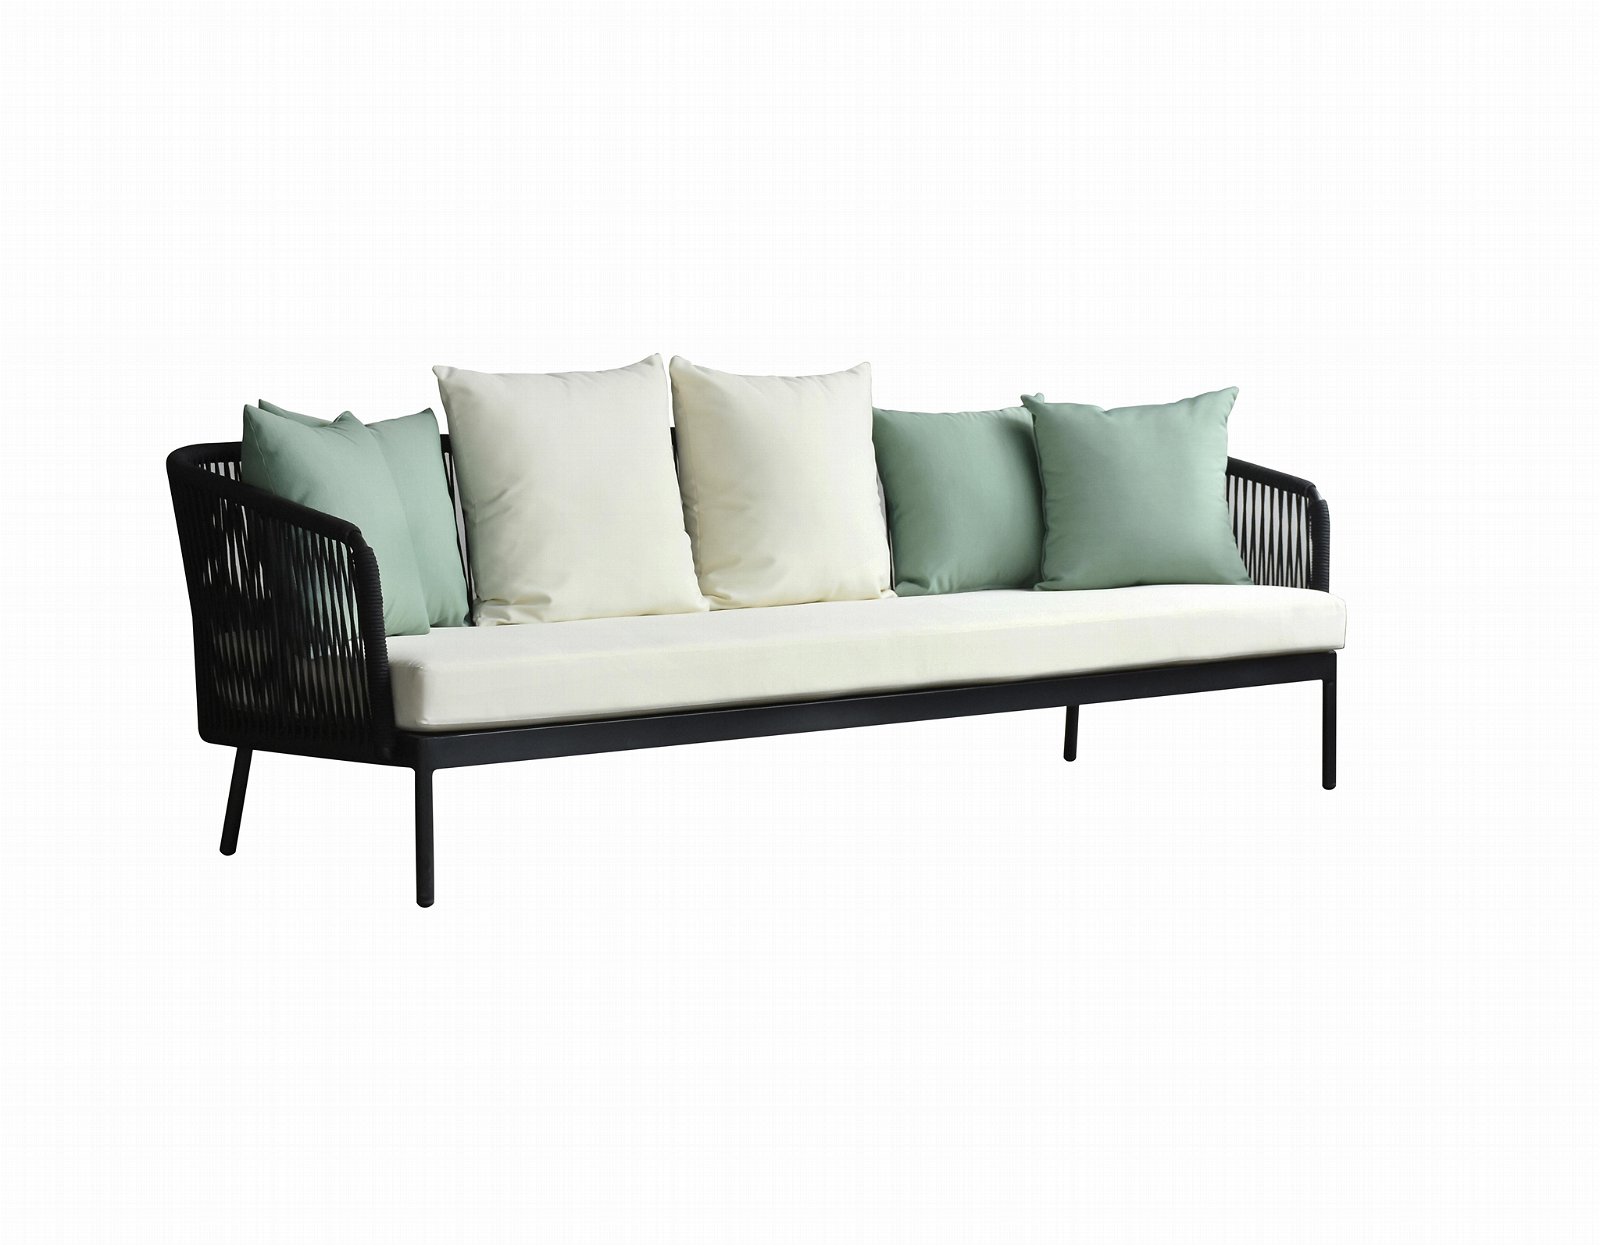 Hormel high end furniture  aluminum and ribbon design outdoor rattan sofa sets